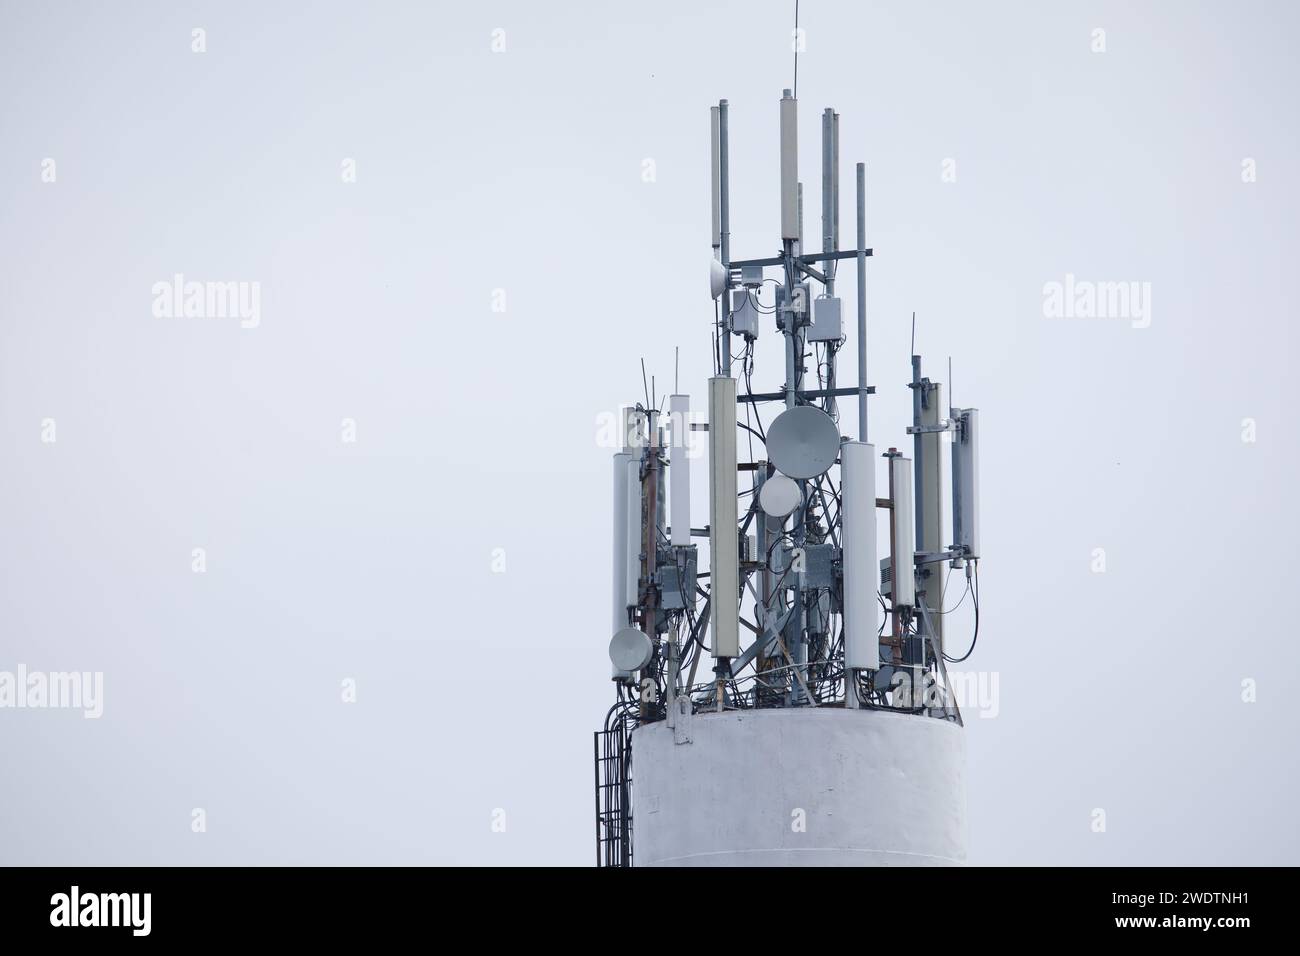 torre degli operatori mobili 4G, stazione di comunicazione. Foto di alta qualità Foto Stock